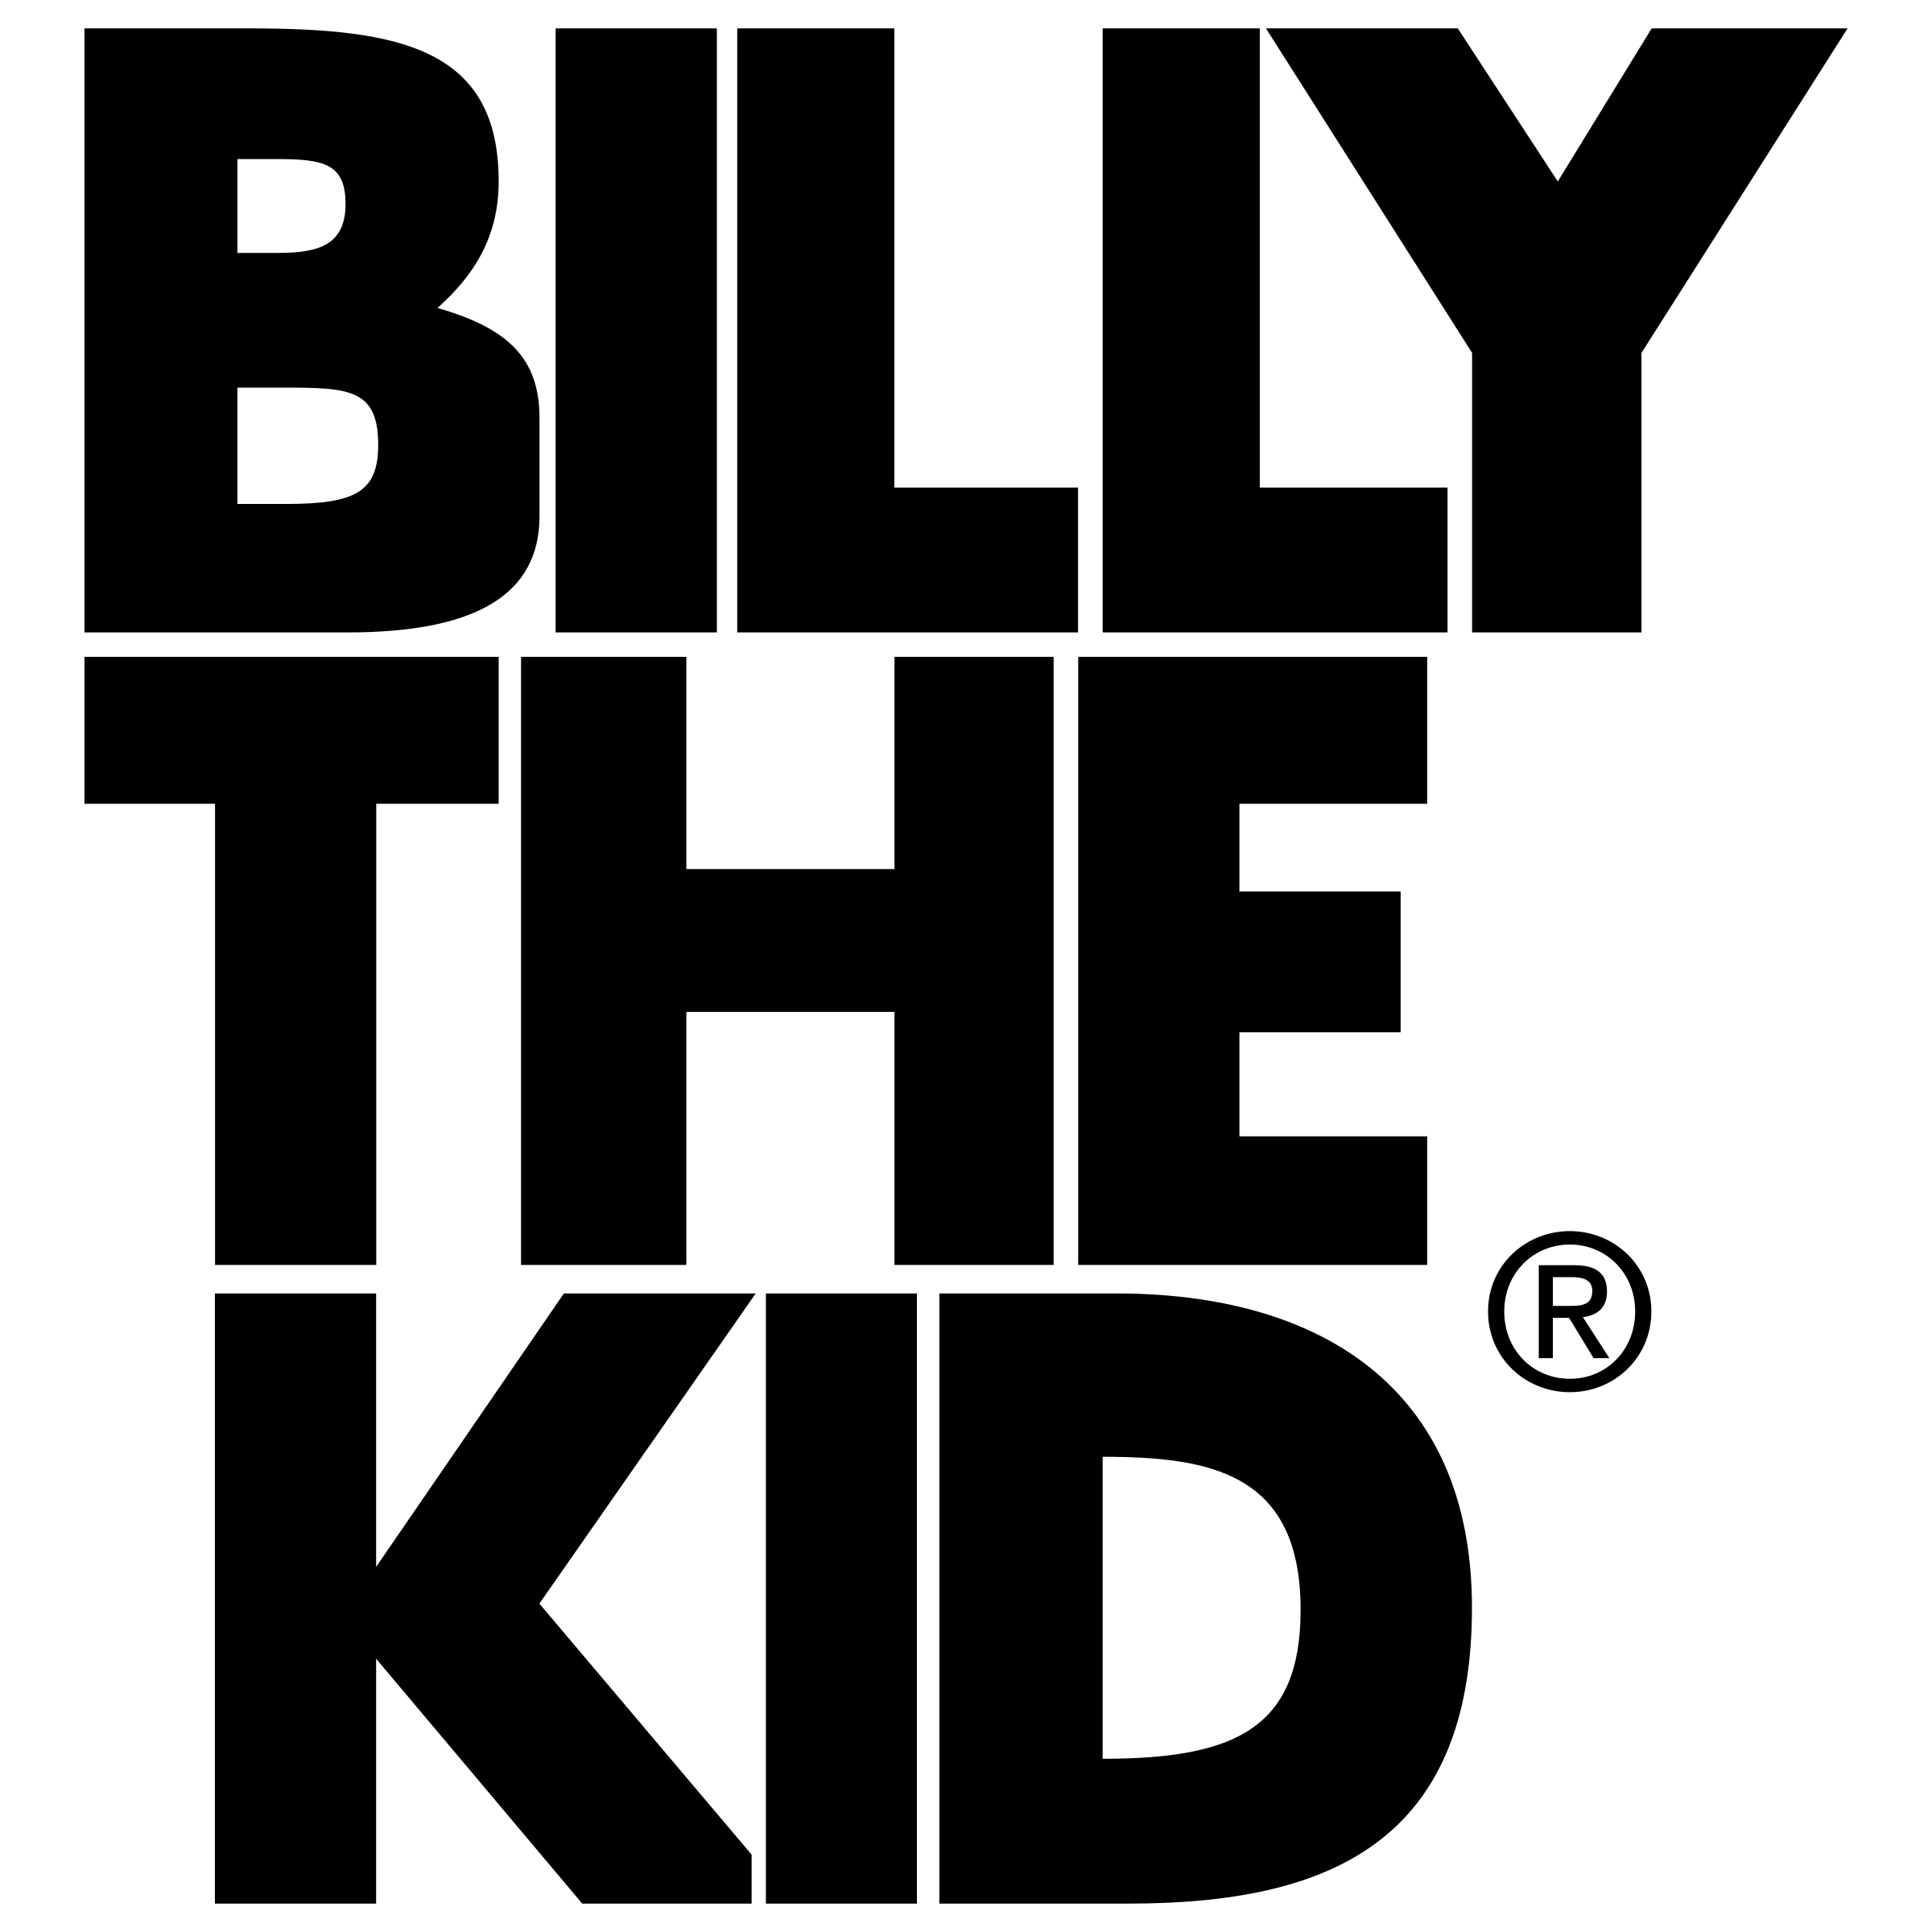 Billy Logo - Billy The Kid Logo PNG Transparent & SVG Vector